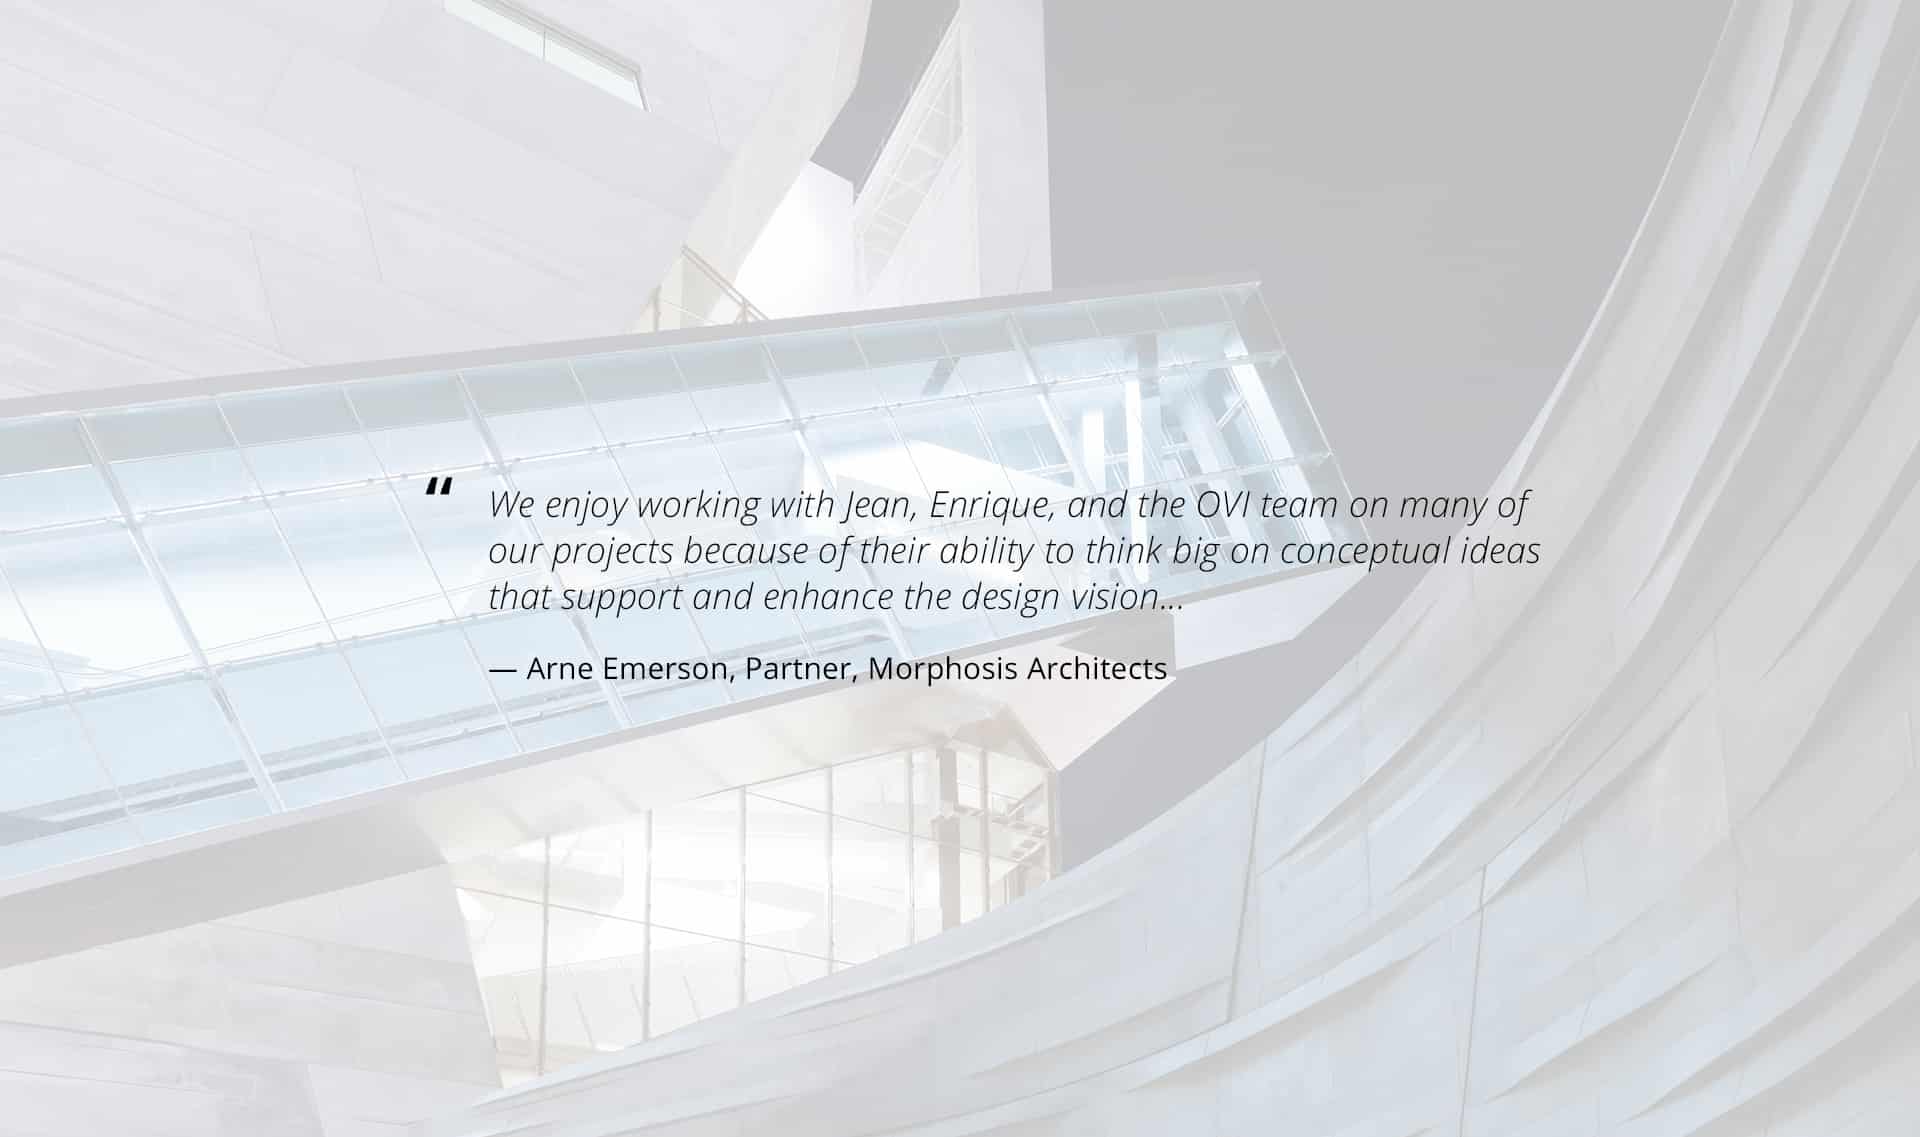 Arne Emerson, Partner, Morphosis Architects Testimonial about OVI